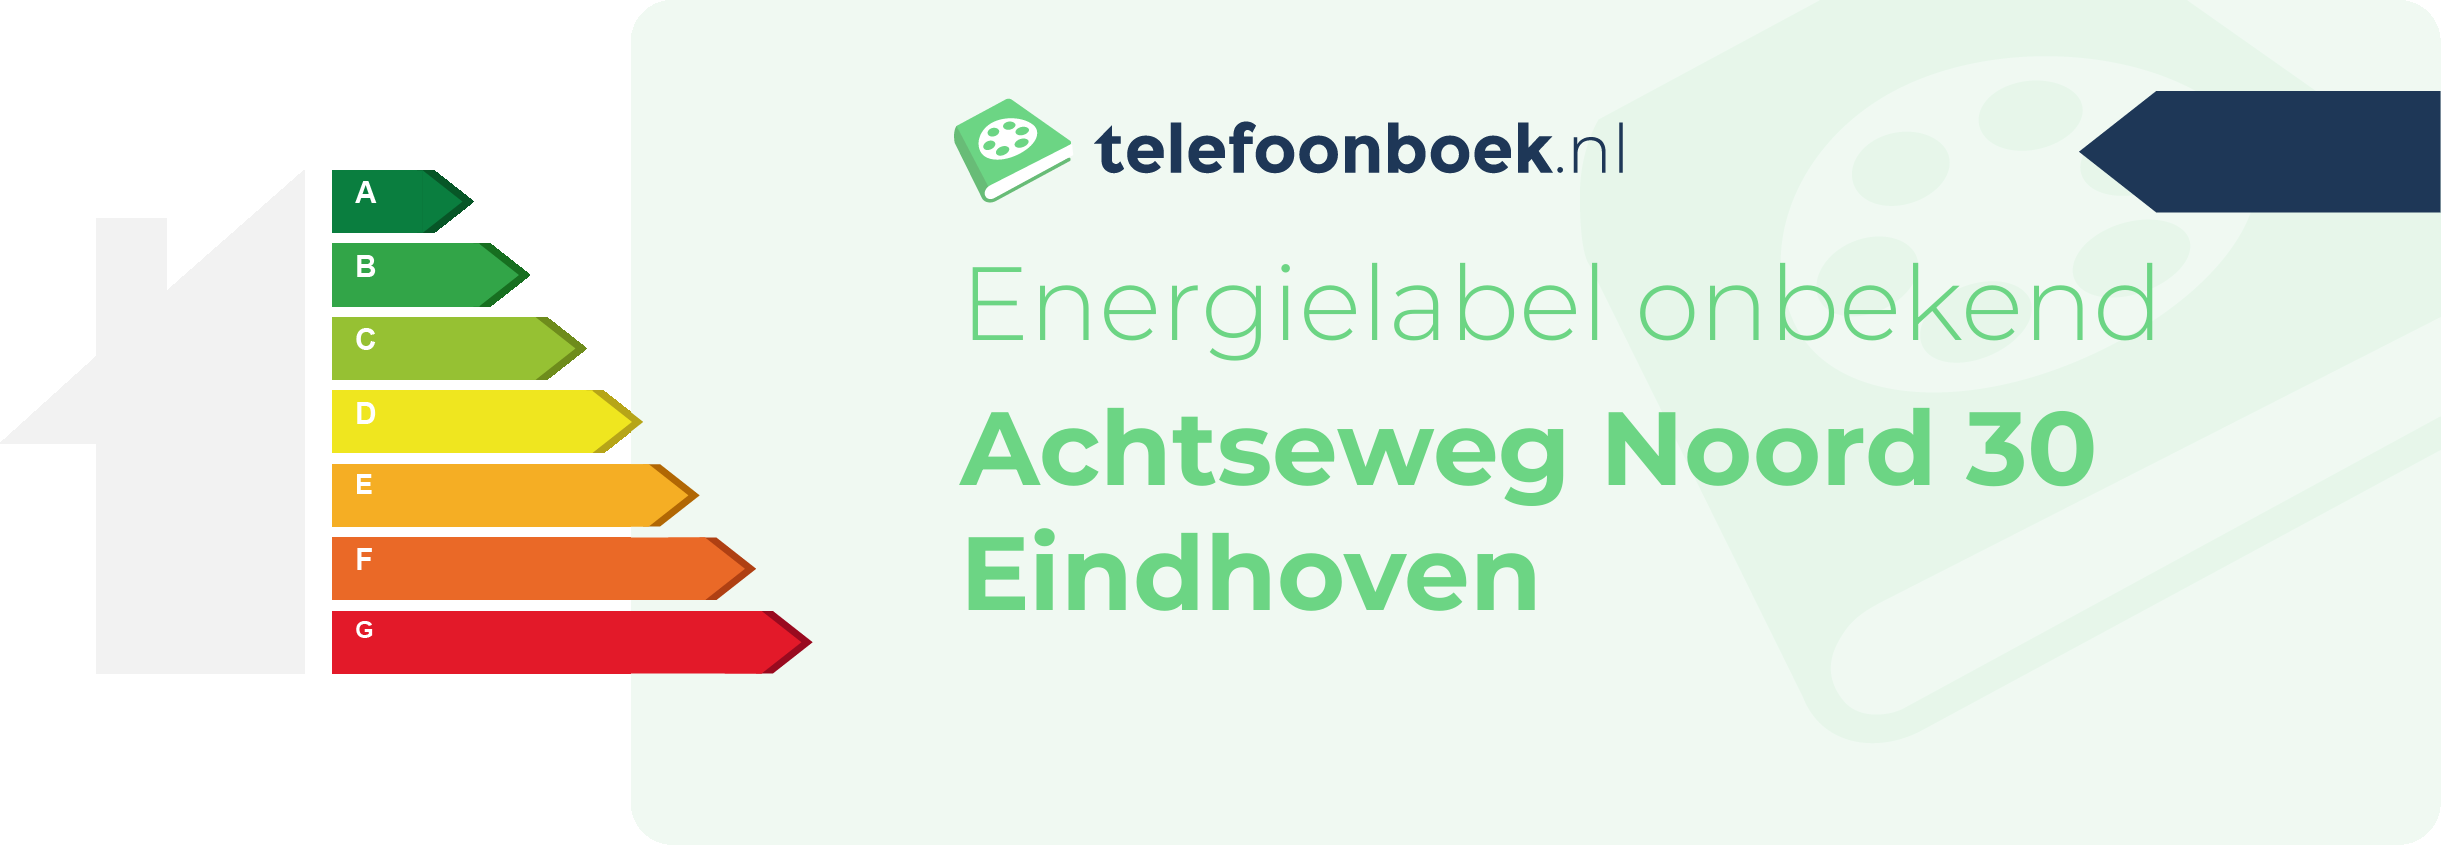 Energielabel Achtseweg Noord 30 Eindhoven